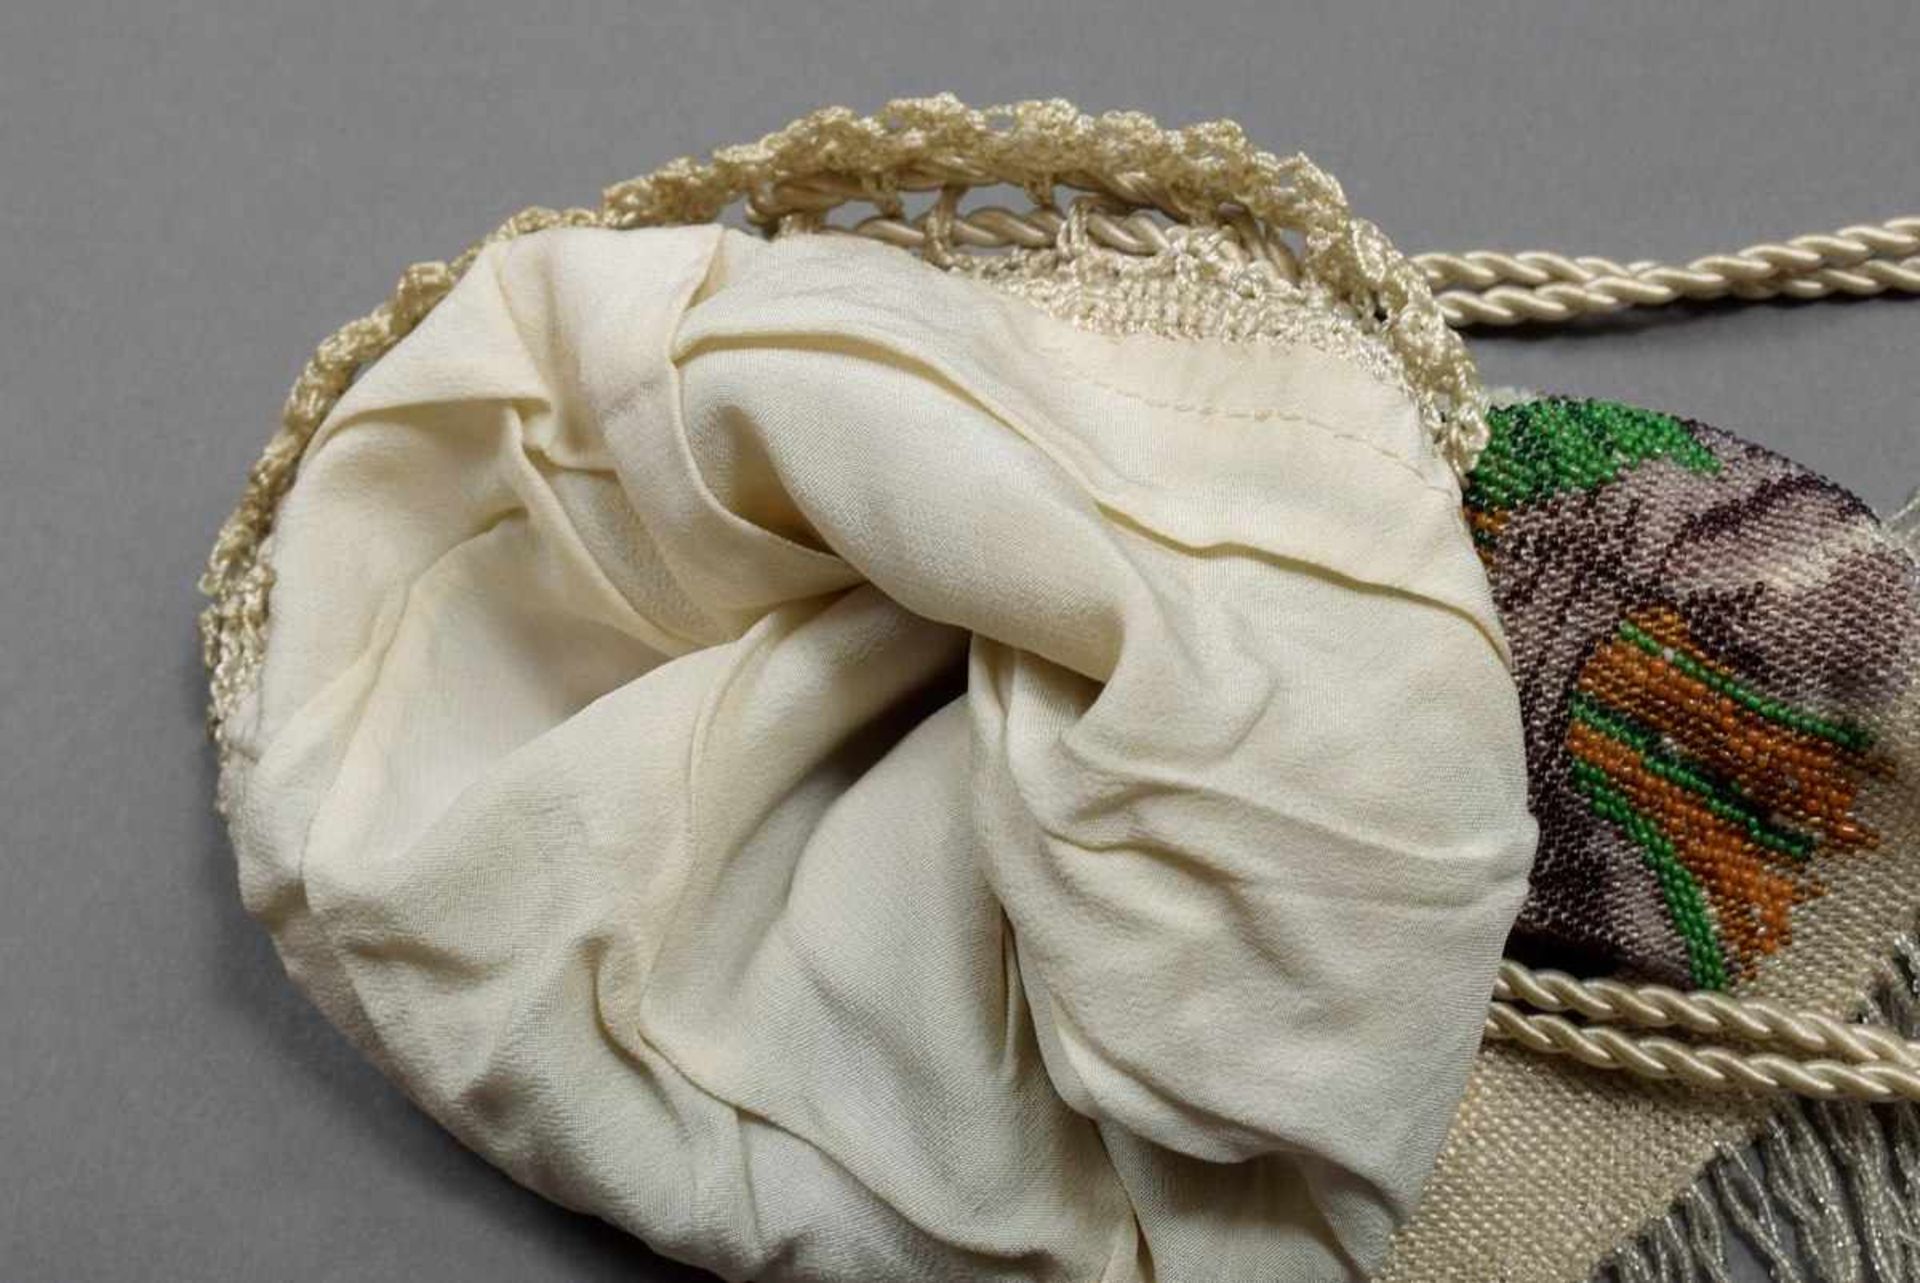 Beige Biedermeier pearl bag with floral decoration "flower bouquet", 26x15,5cm, small defects, - Image 4 of 4